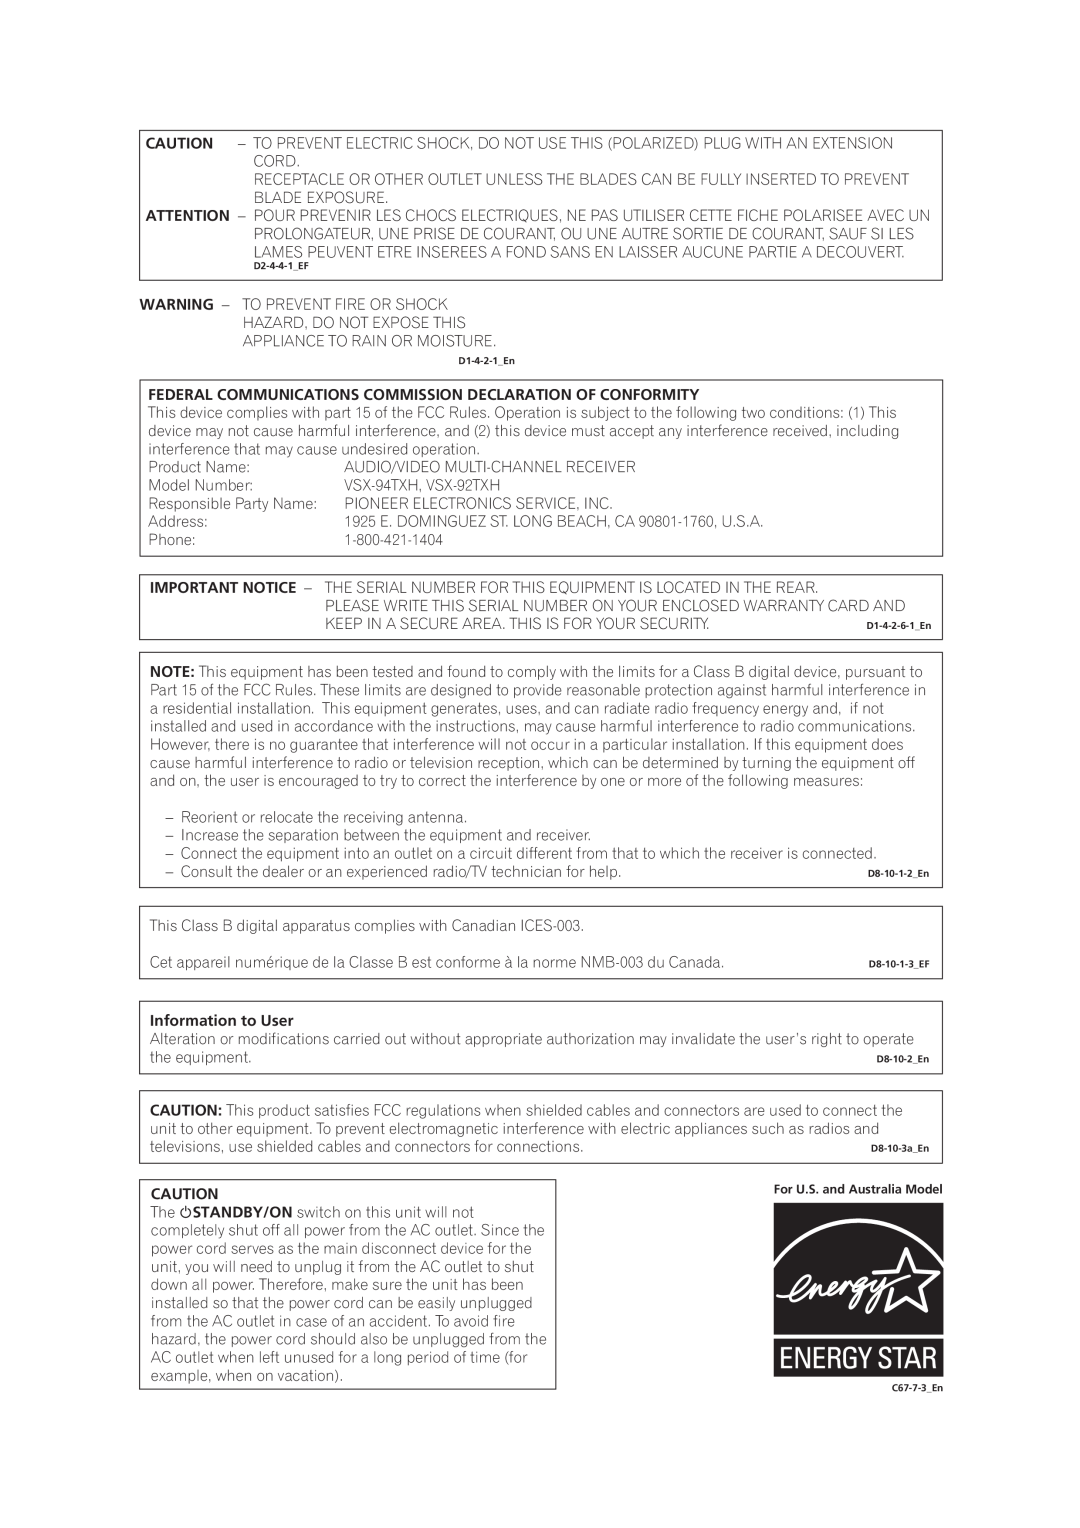 DreamGEAR VSX-94TXH, VSX-92TXH Federal Communications Commission Declaration Of Conformity, Information to User 